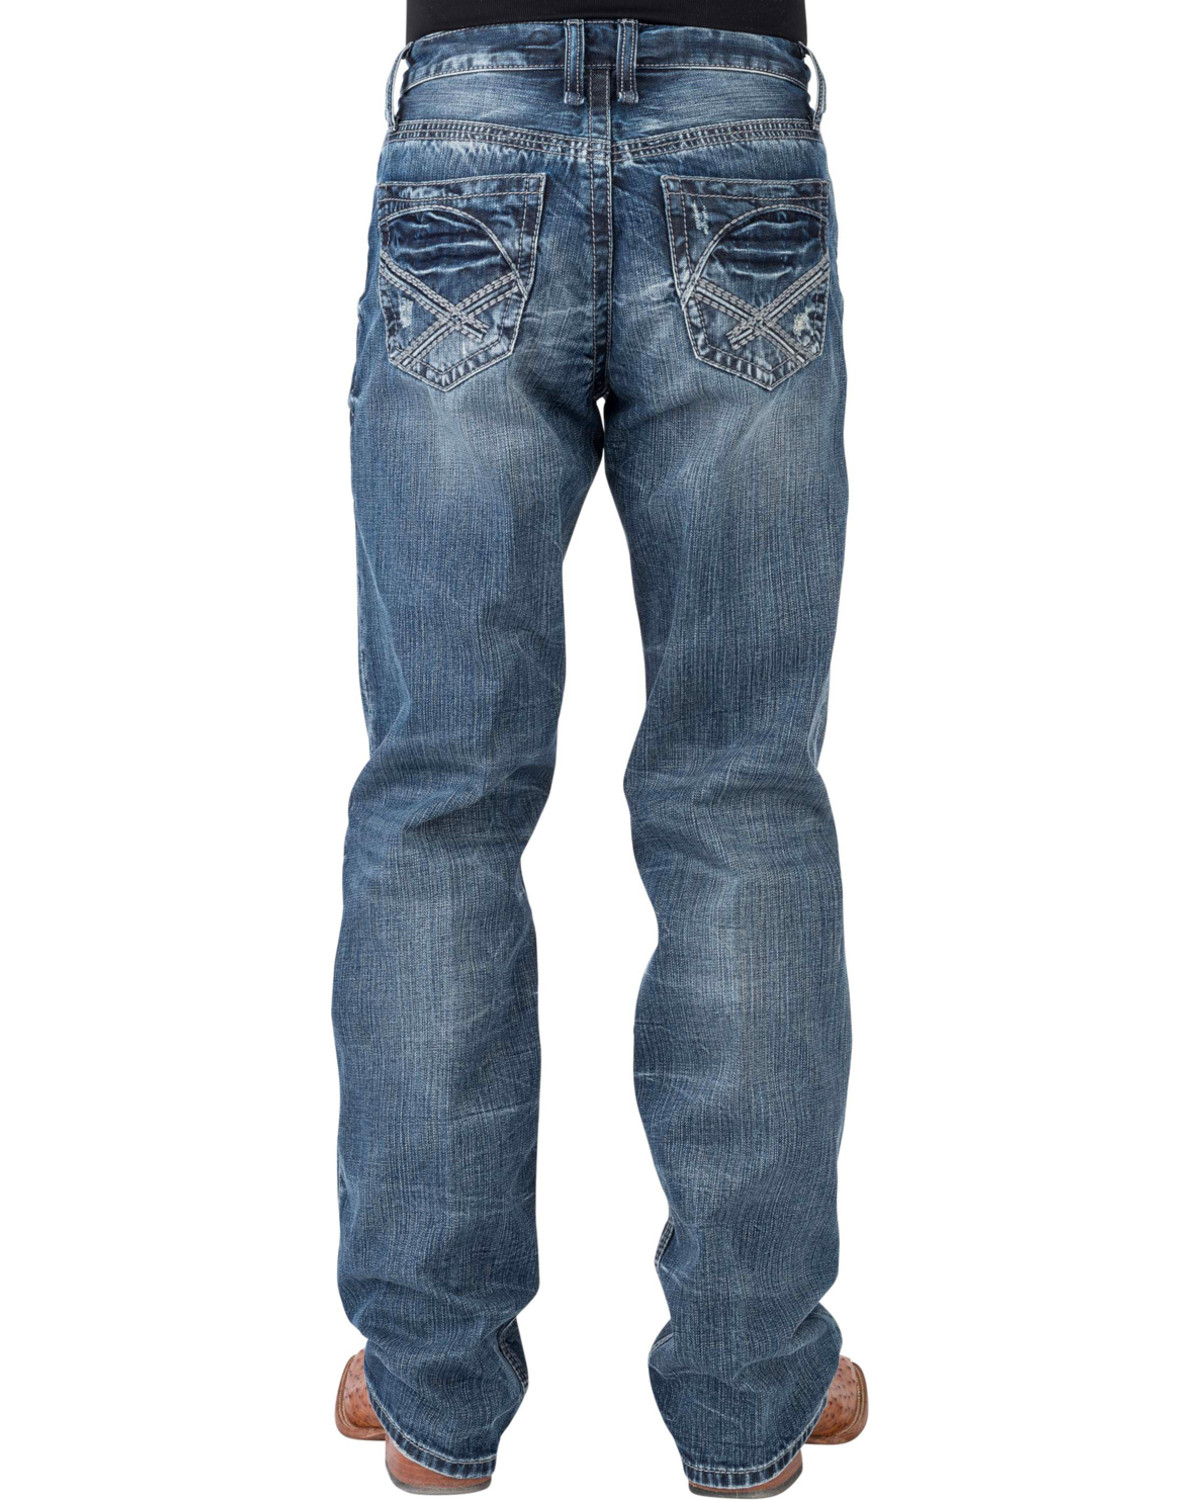 Tin Haul Men's Regular Joe Fit Medium Wash Bootcut Jeans